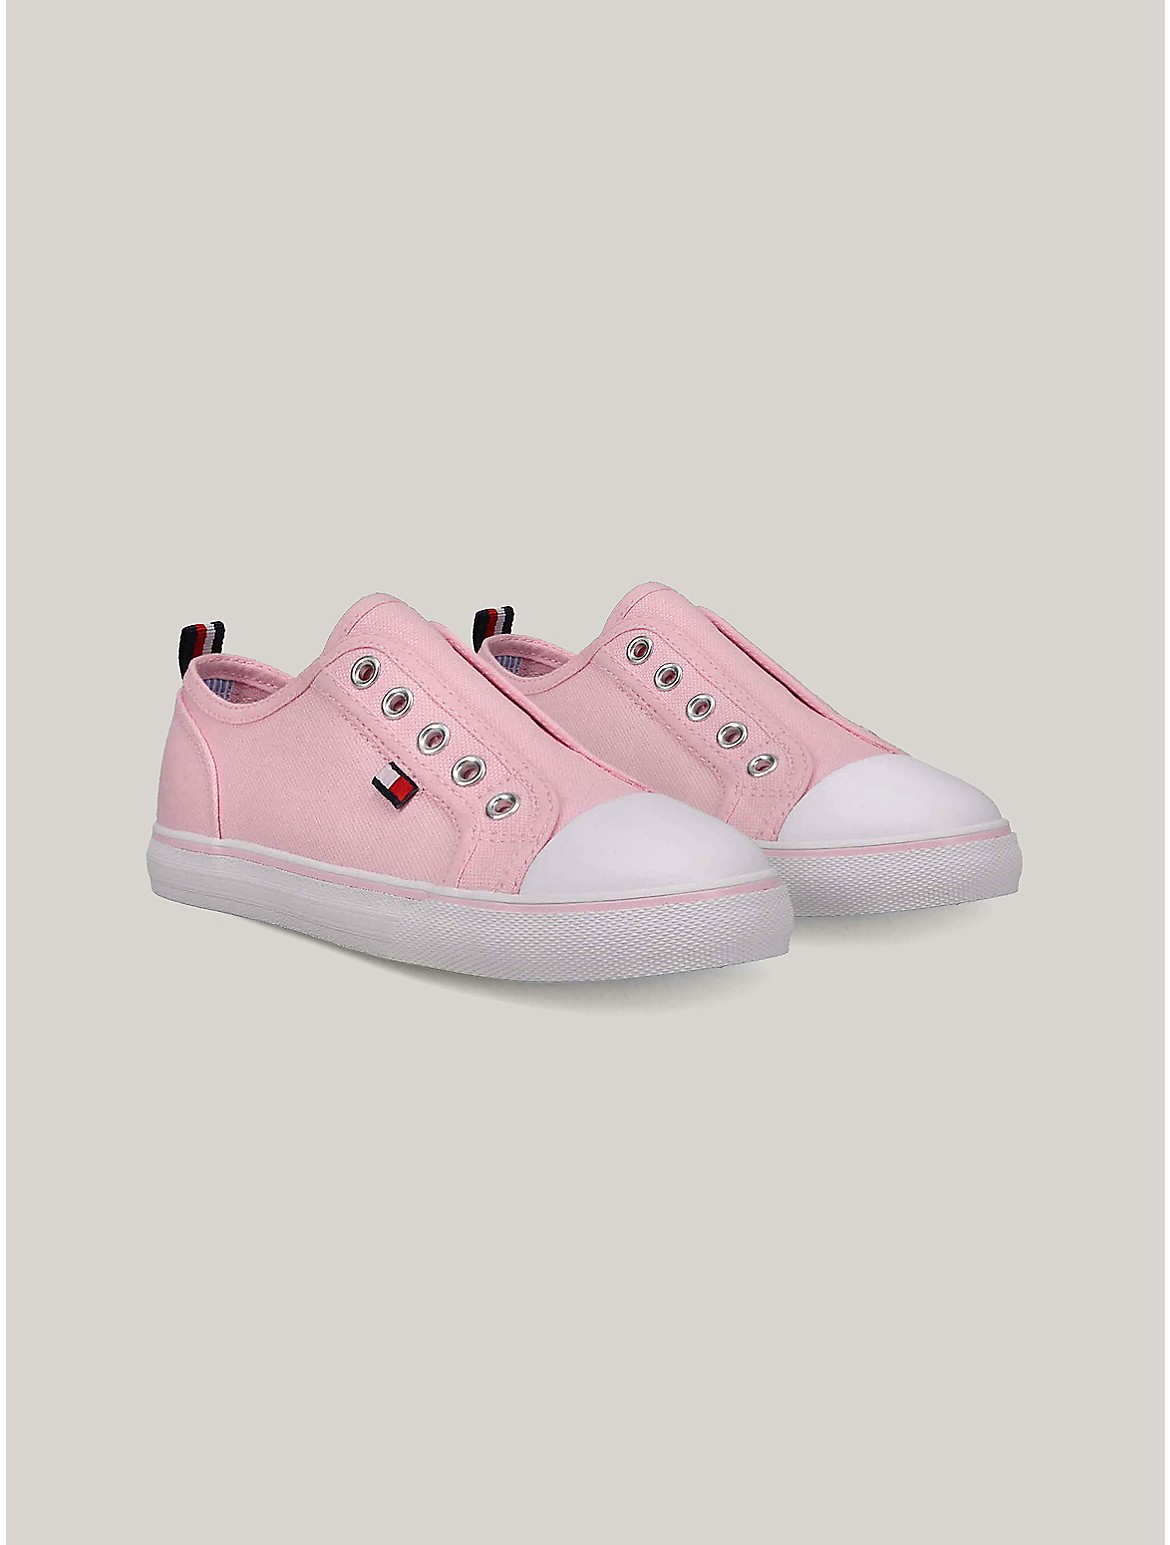 Tommy Hilfiger Girls' Kids' Laceless Sneaker - Pink - 4B